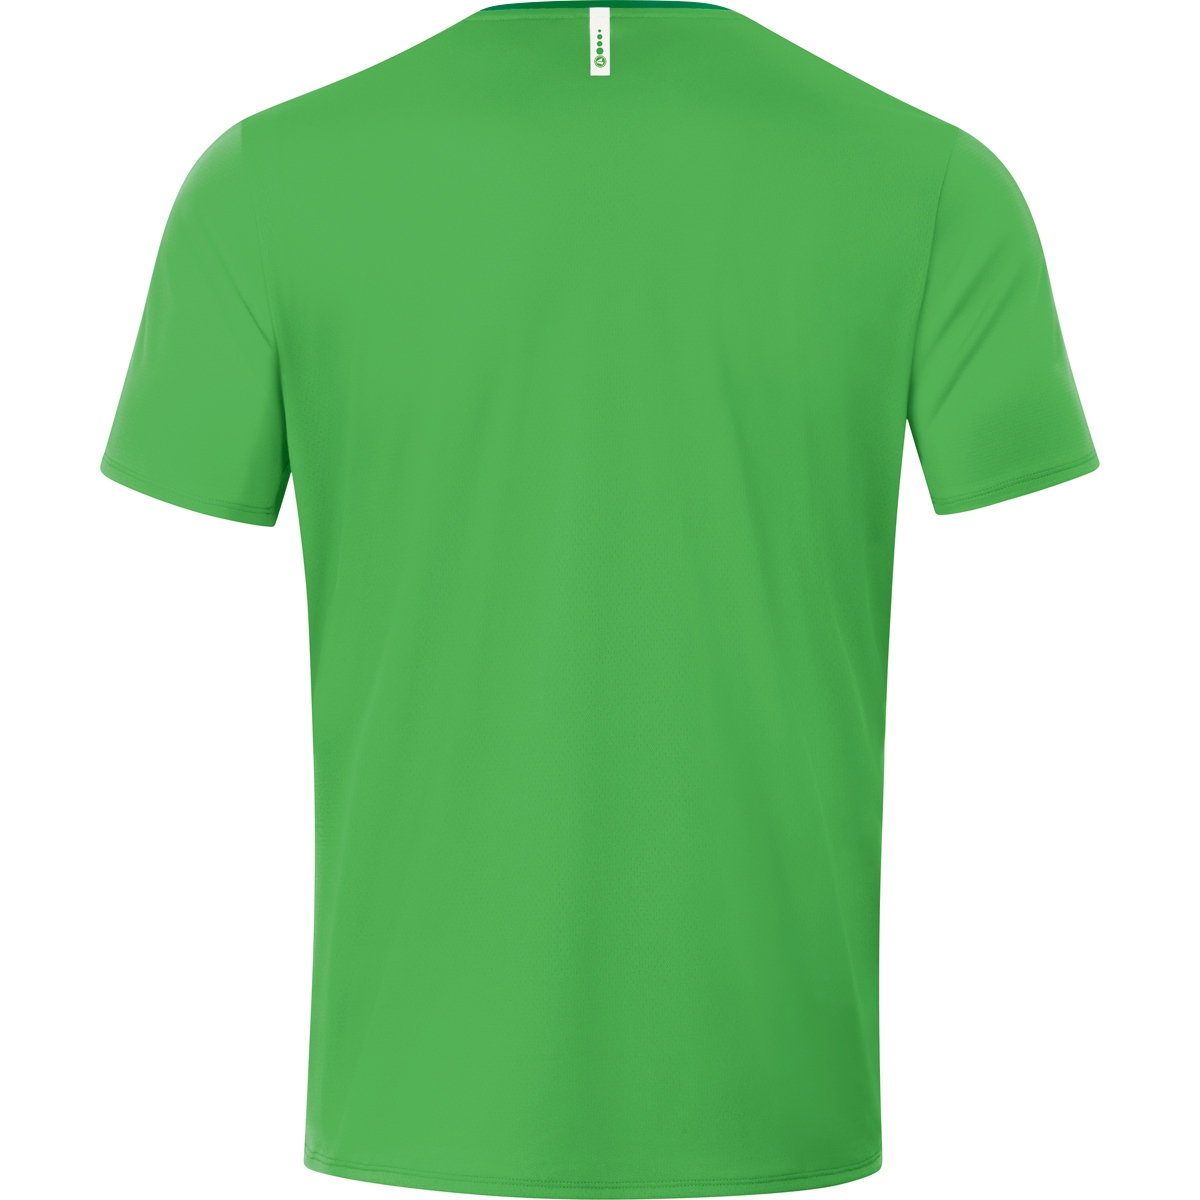 2.0 Herren, S, soft green/sportgrün, Champ Gr. JAKO 6120 T-Shirt